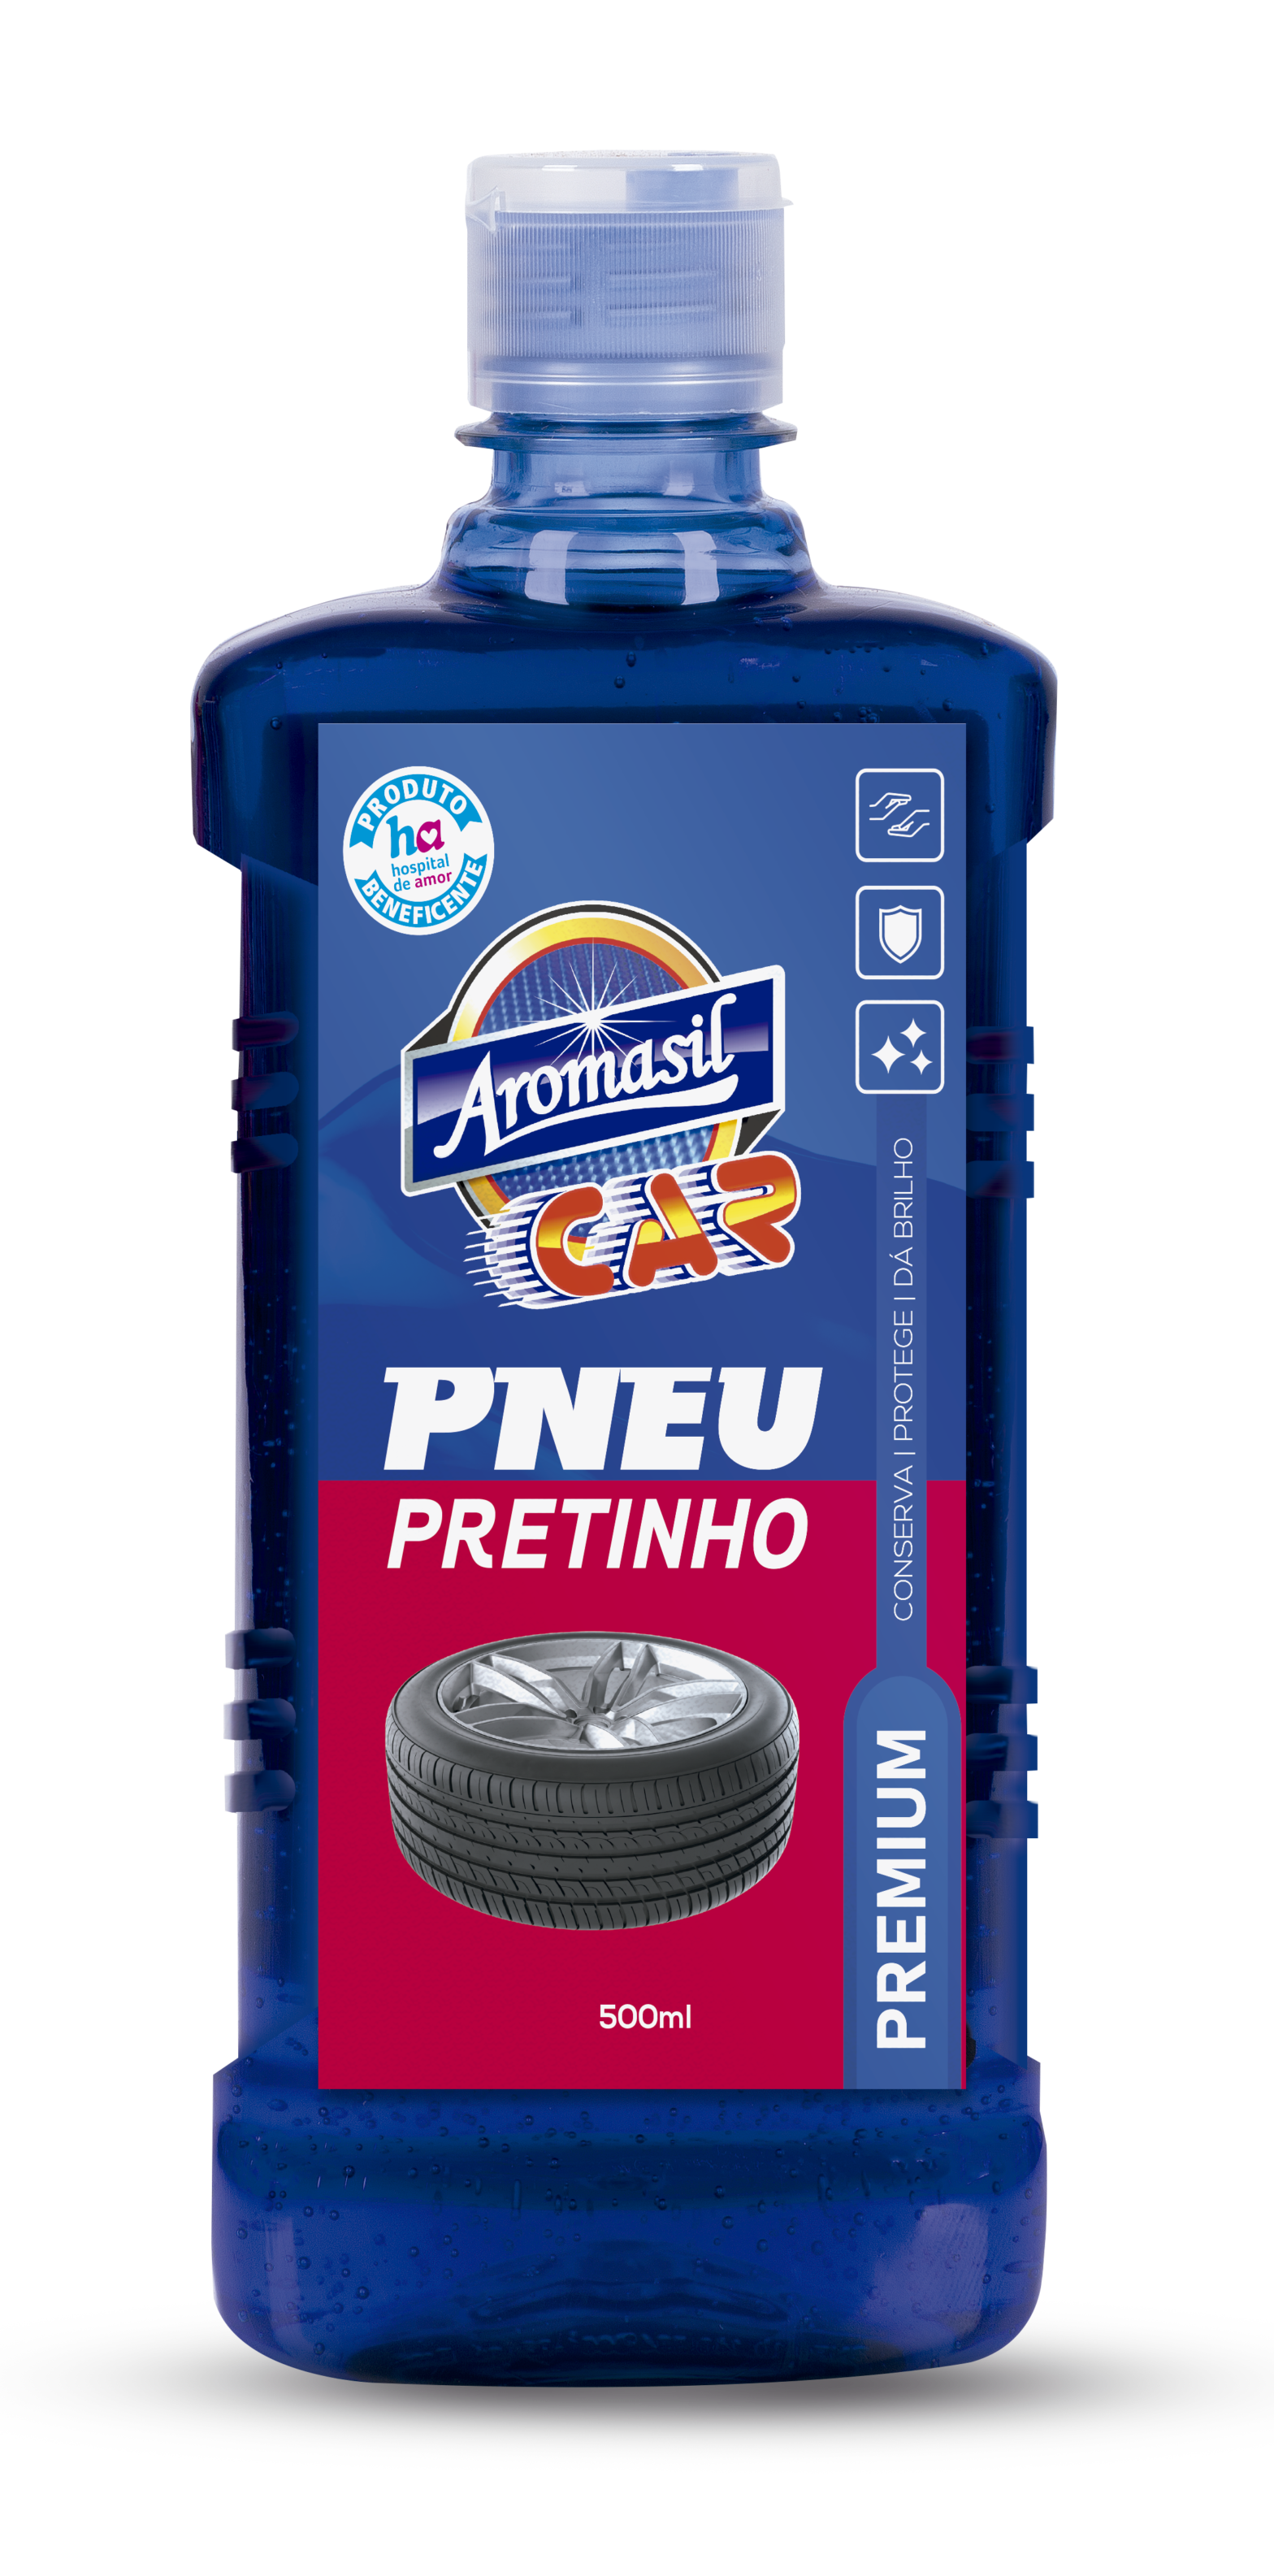 Pneu Pretinho Premium Aromasil Car – 500ml